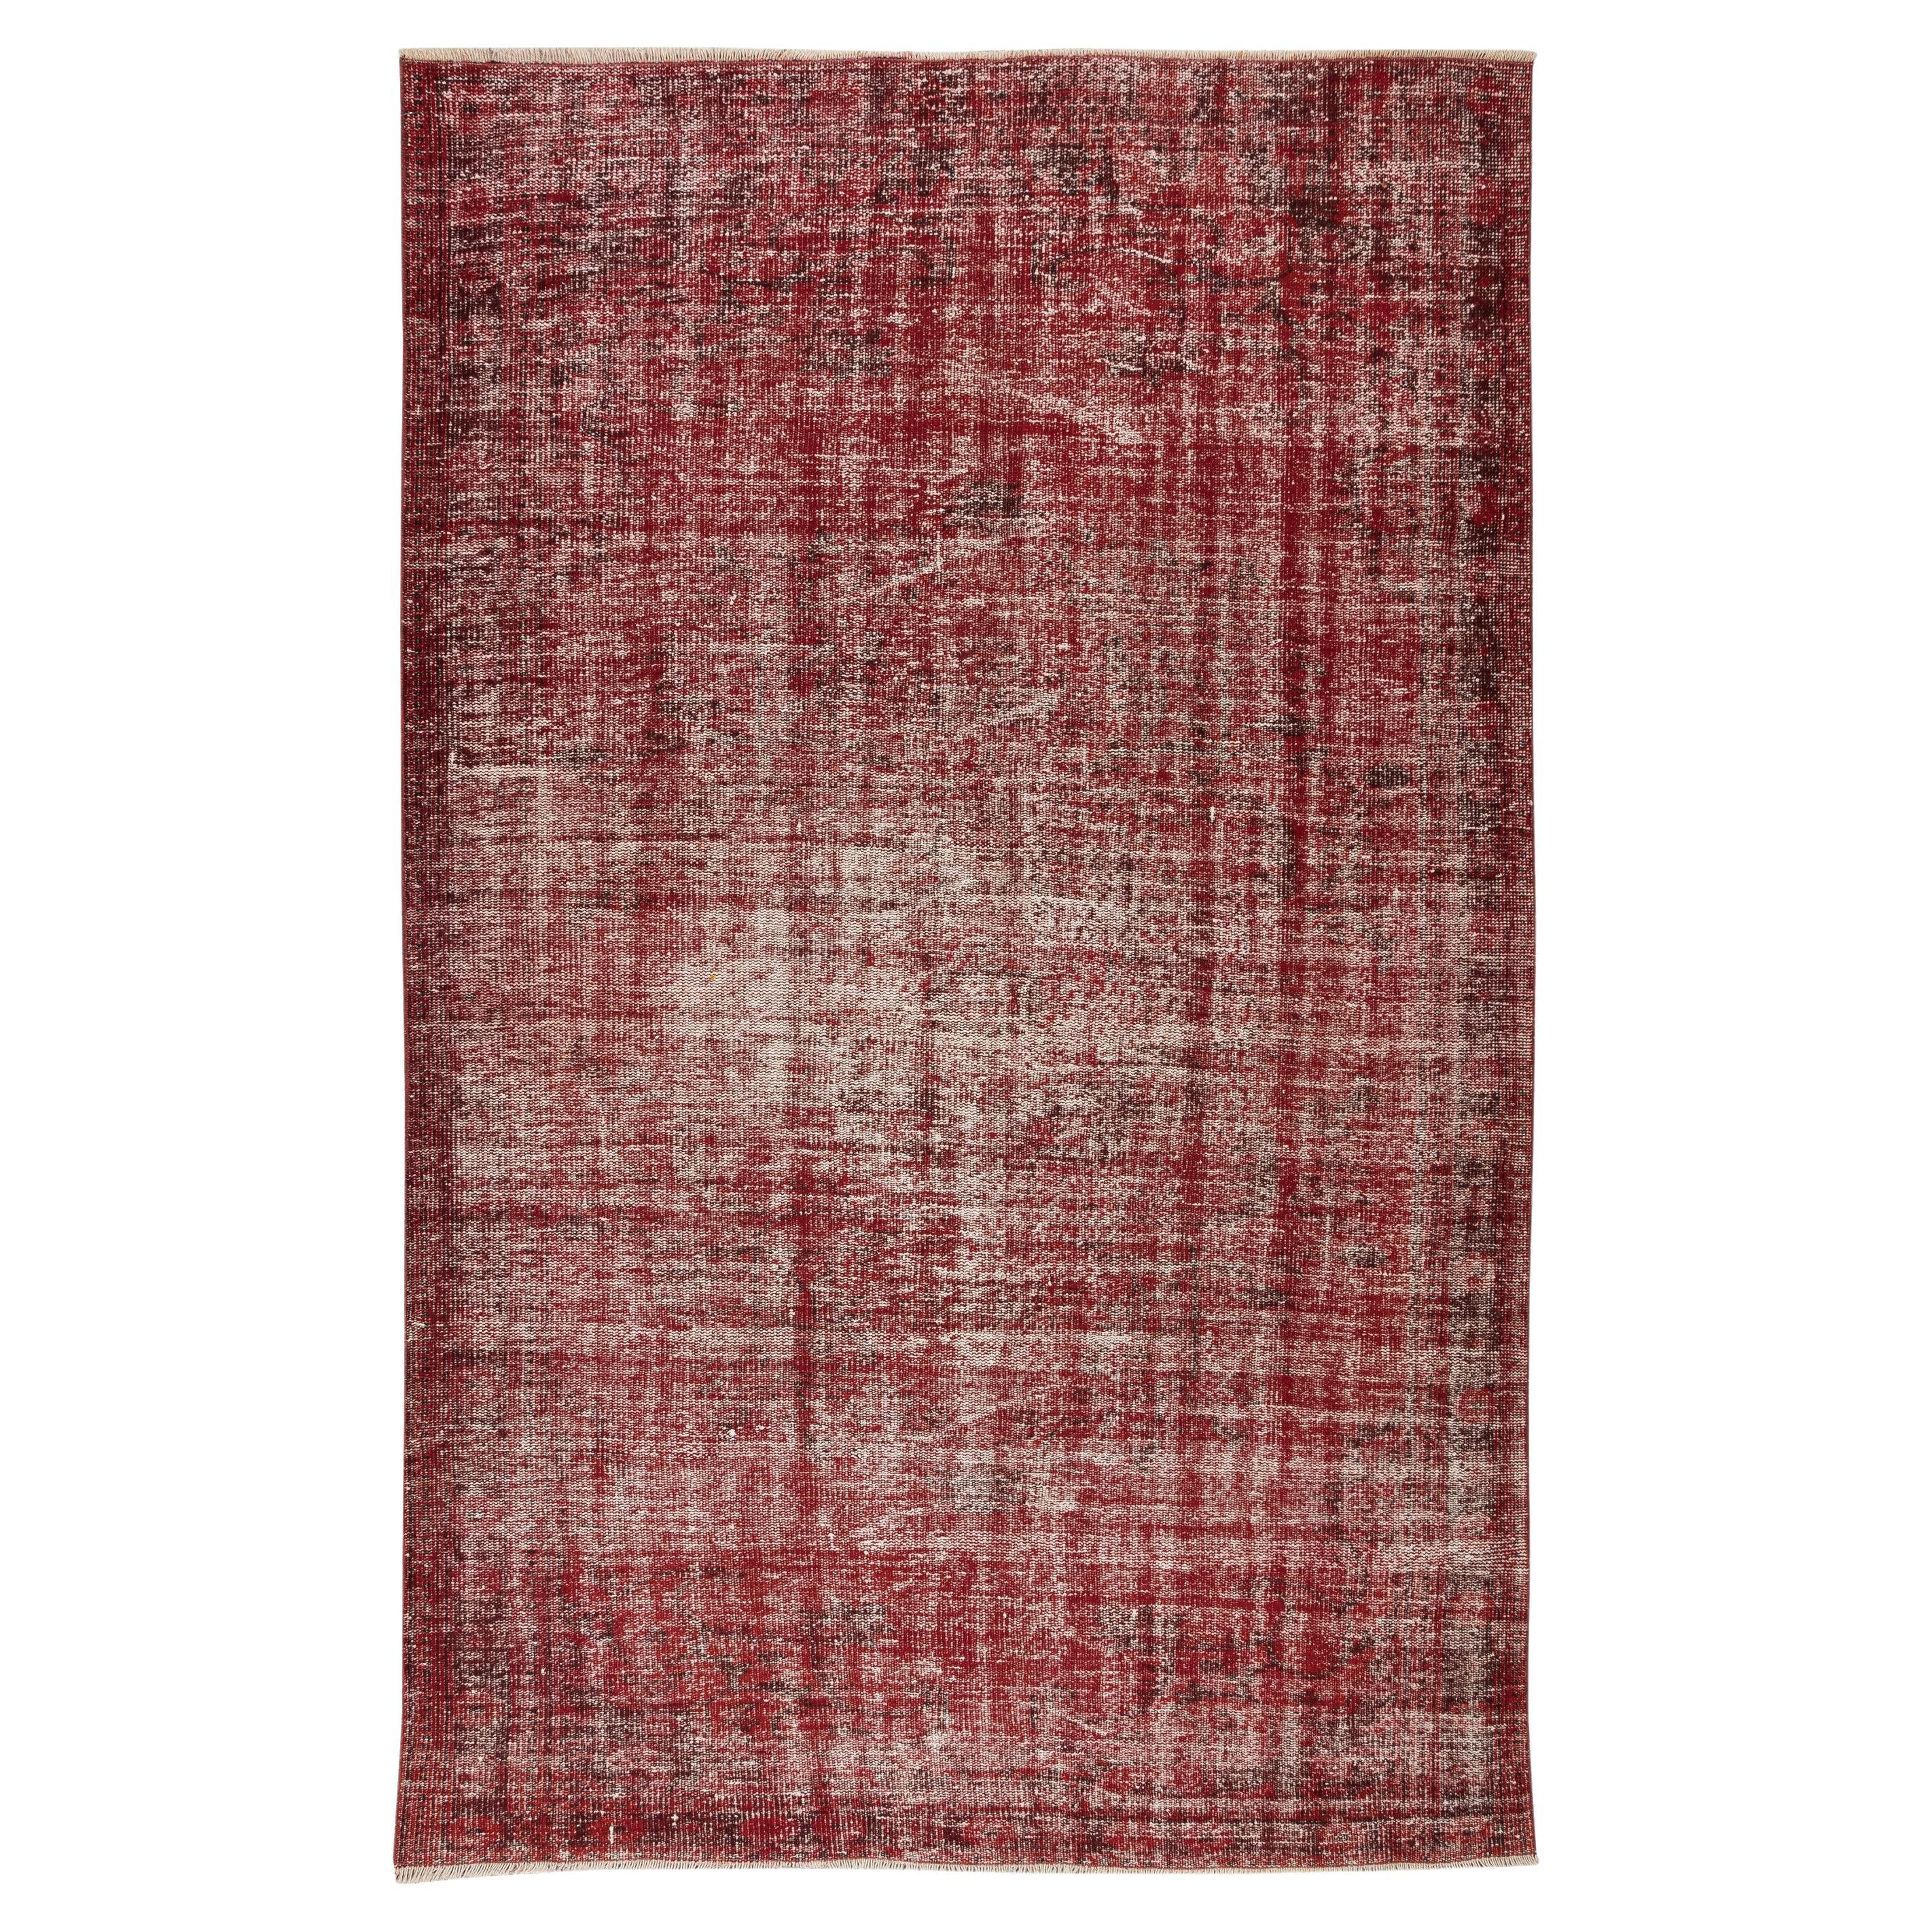 Turkish Burgundy Red Rug, Shabby Chic Floor Covering, Handmade Carpet For Sale